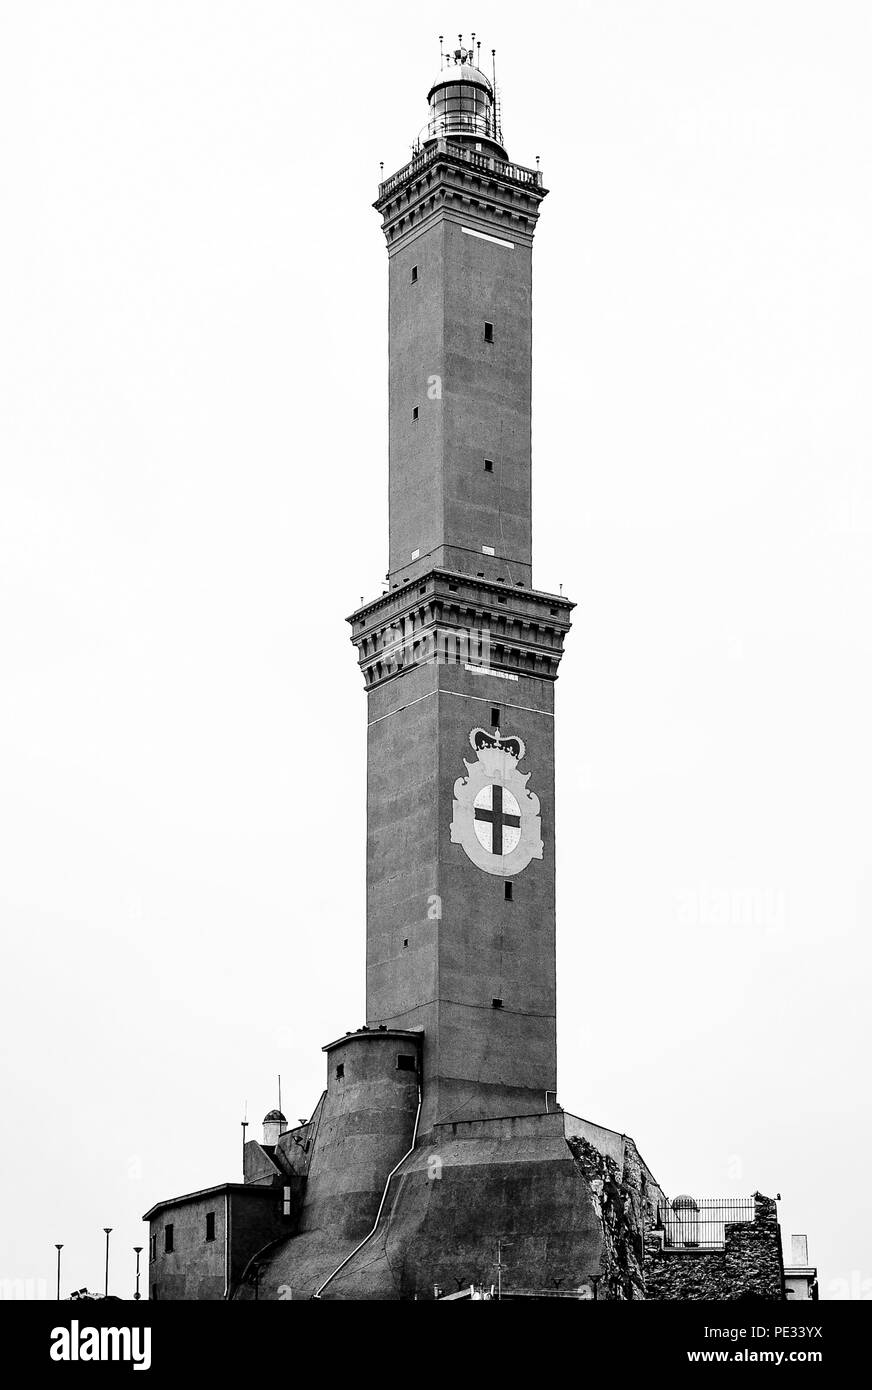 La Lanterna,the lighthouse and landmark of Genova,Italy. Stock Photo